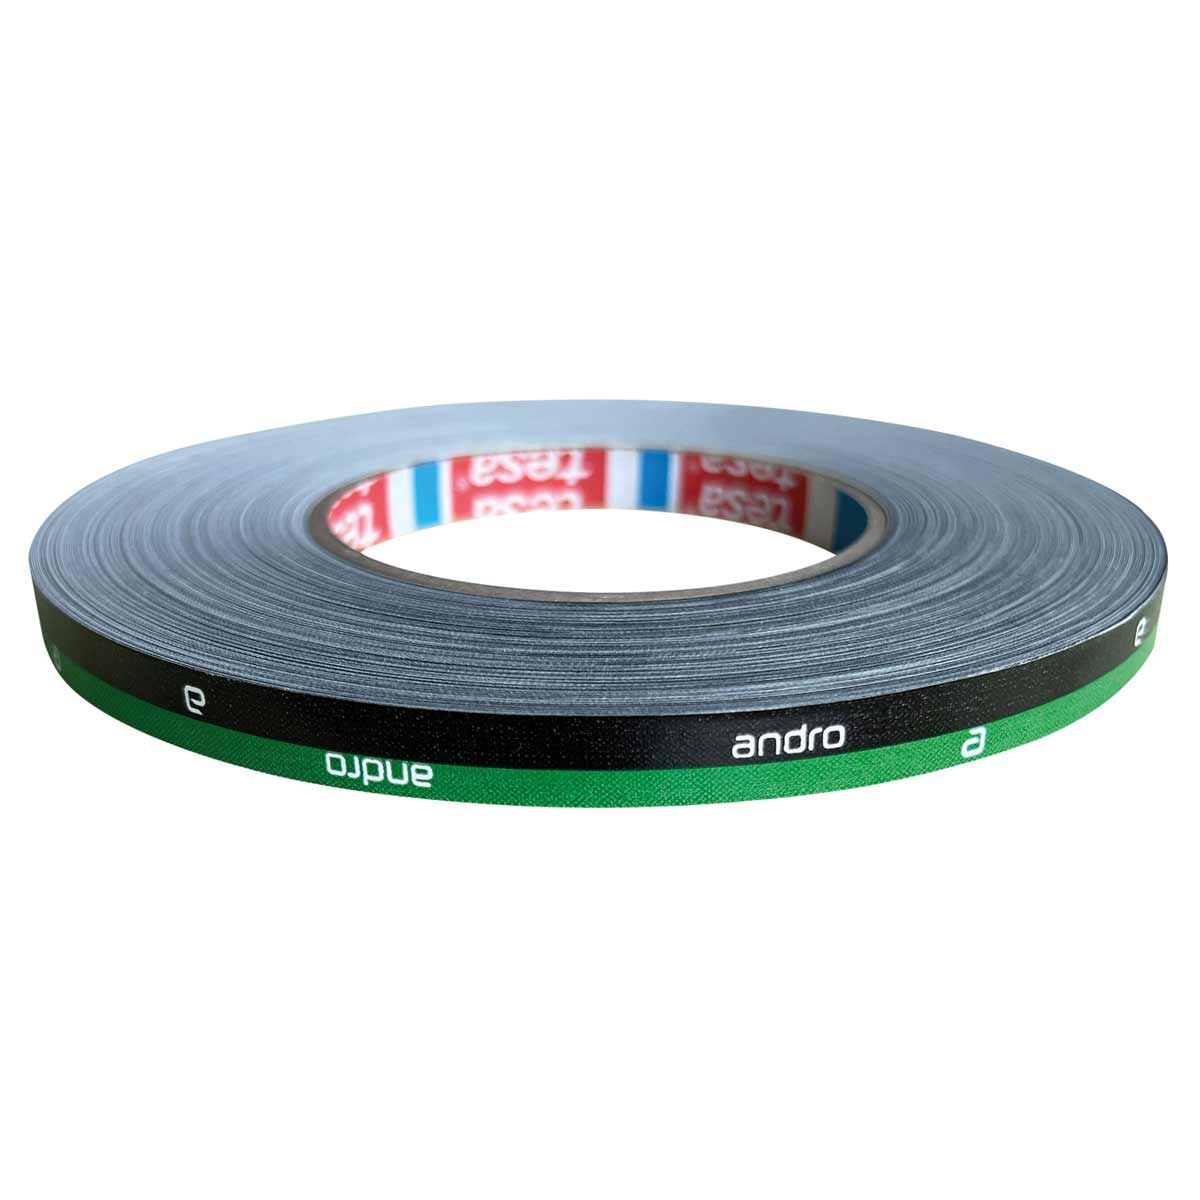 andro Edge Tape Stripes 12mm/50m black/green